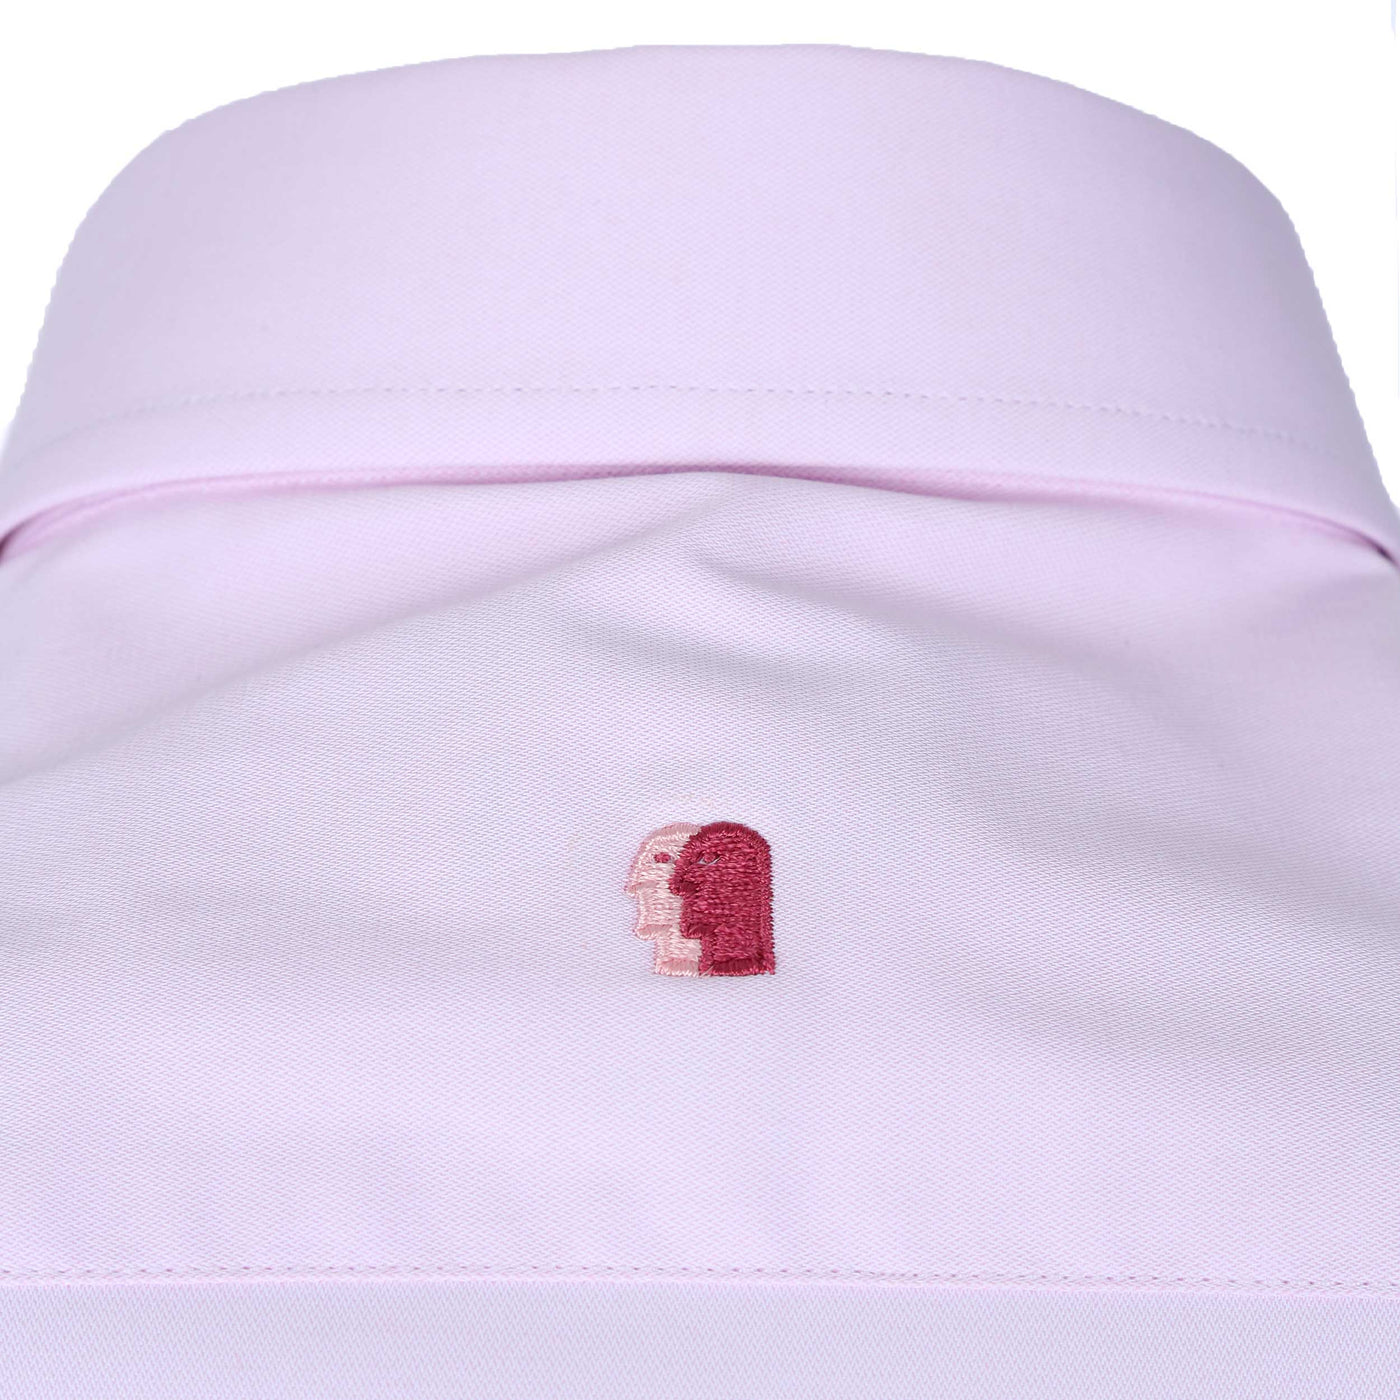 Remus Uomo 2 Way Stretch SS Shirt in Pink Nape Logo